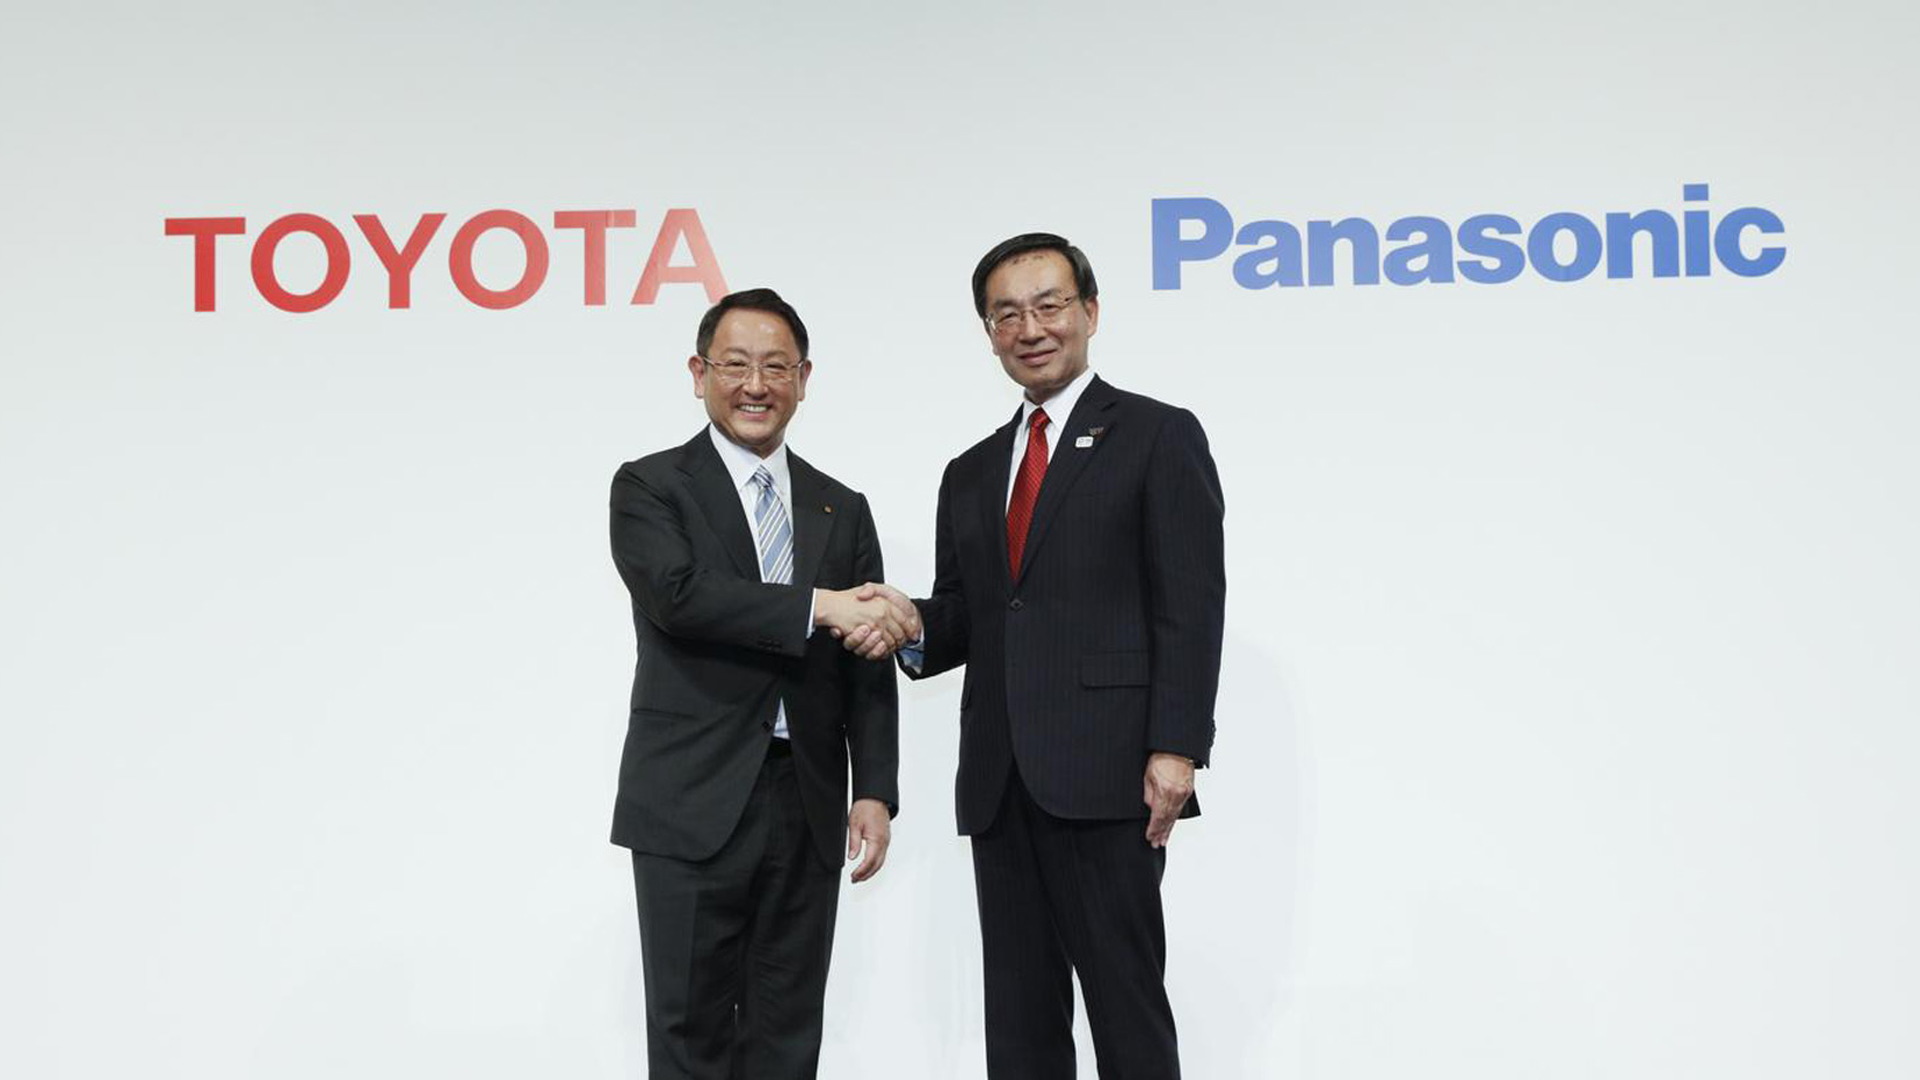 Toyota President Akio Toyoda (left) and Panasonic President Kazuhiro Tsuga